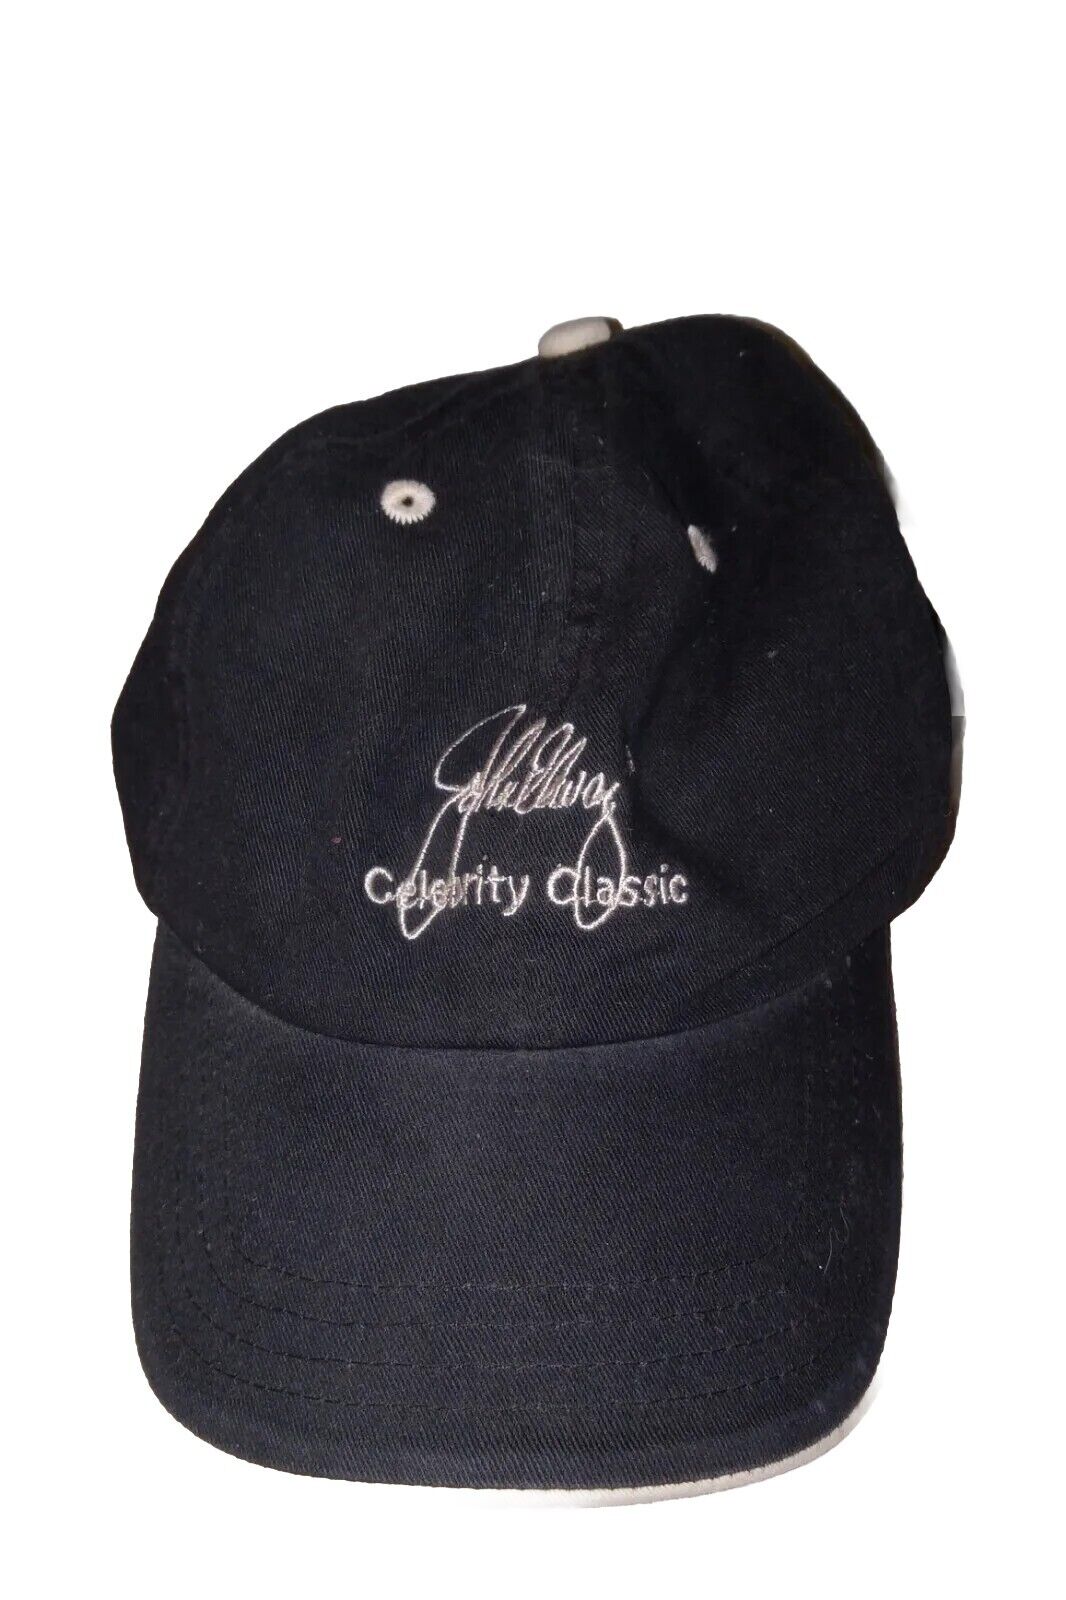 John Elway Autographed Golf Cap Celebrity Classic Hat NFL Denver Broncos Vintage